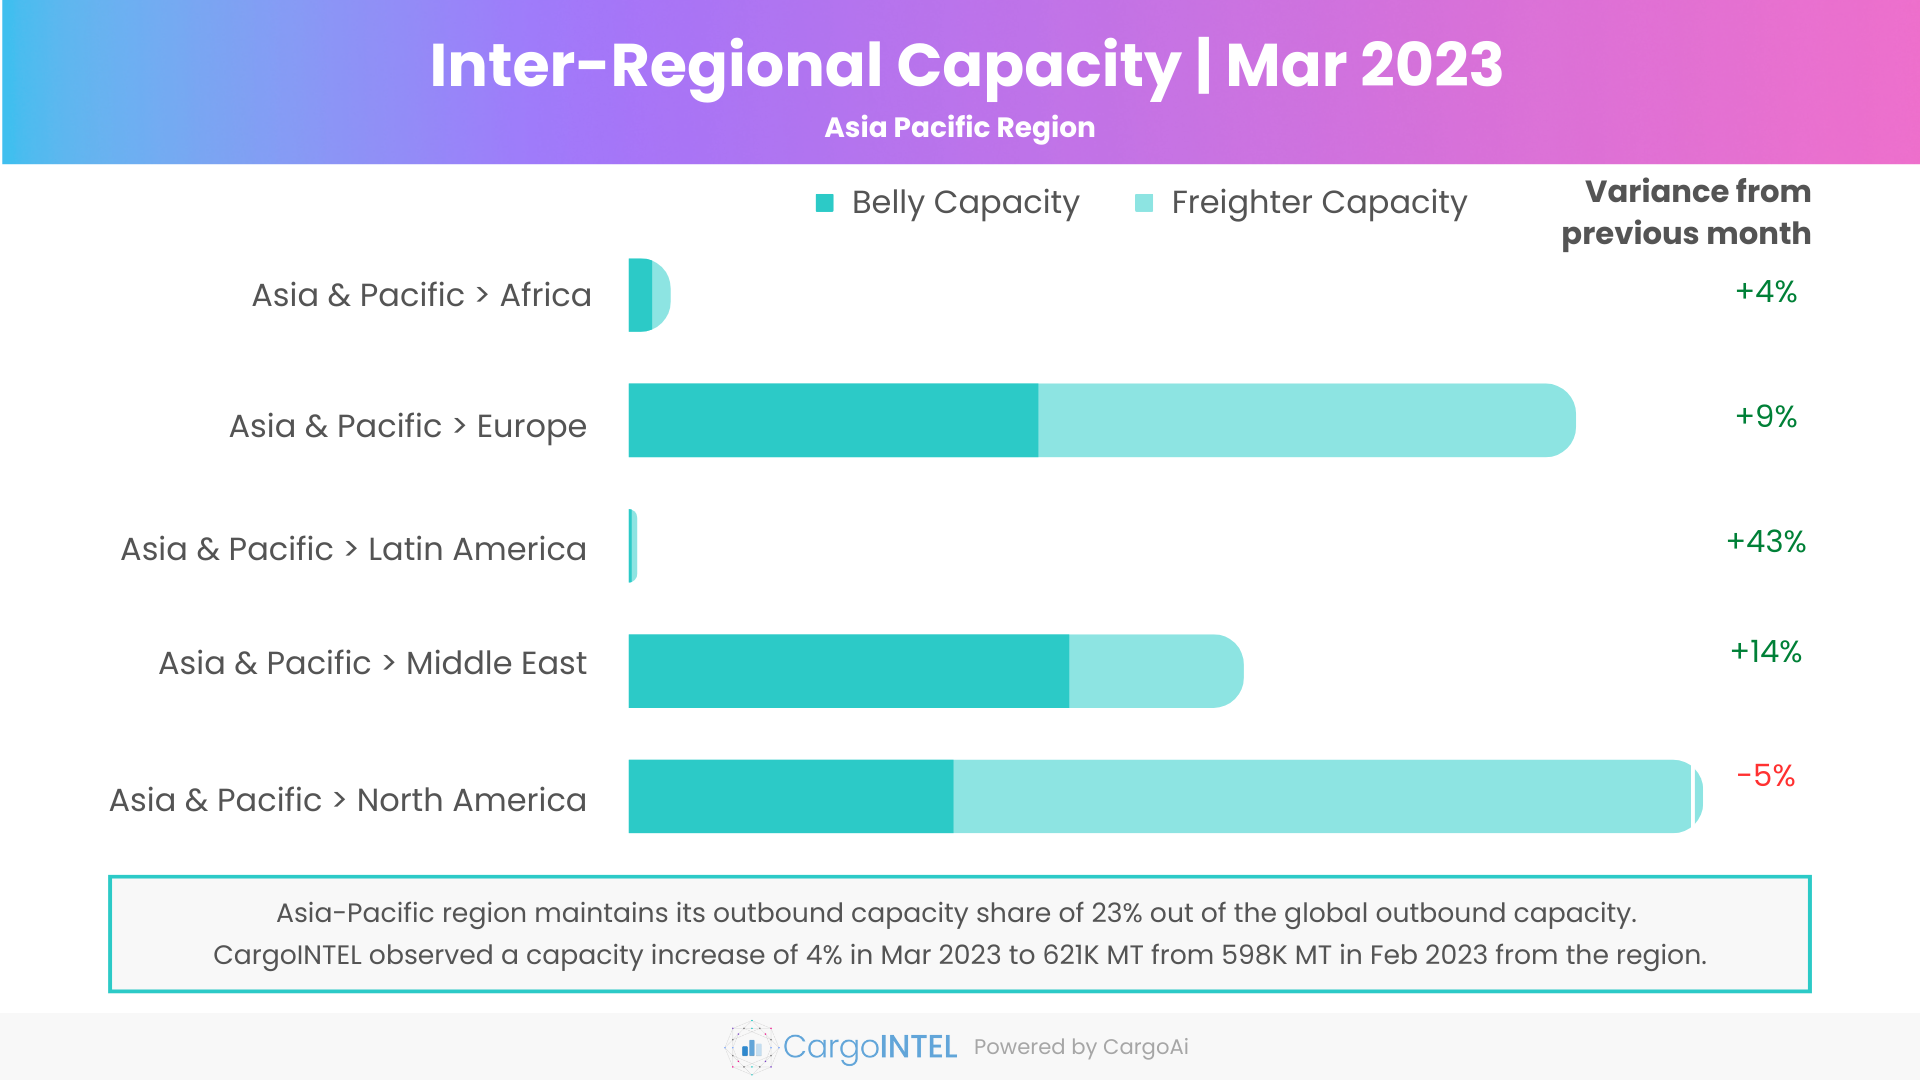 Air cargo capacity of Asia Pacific region of Mar 2023